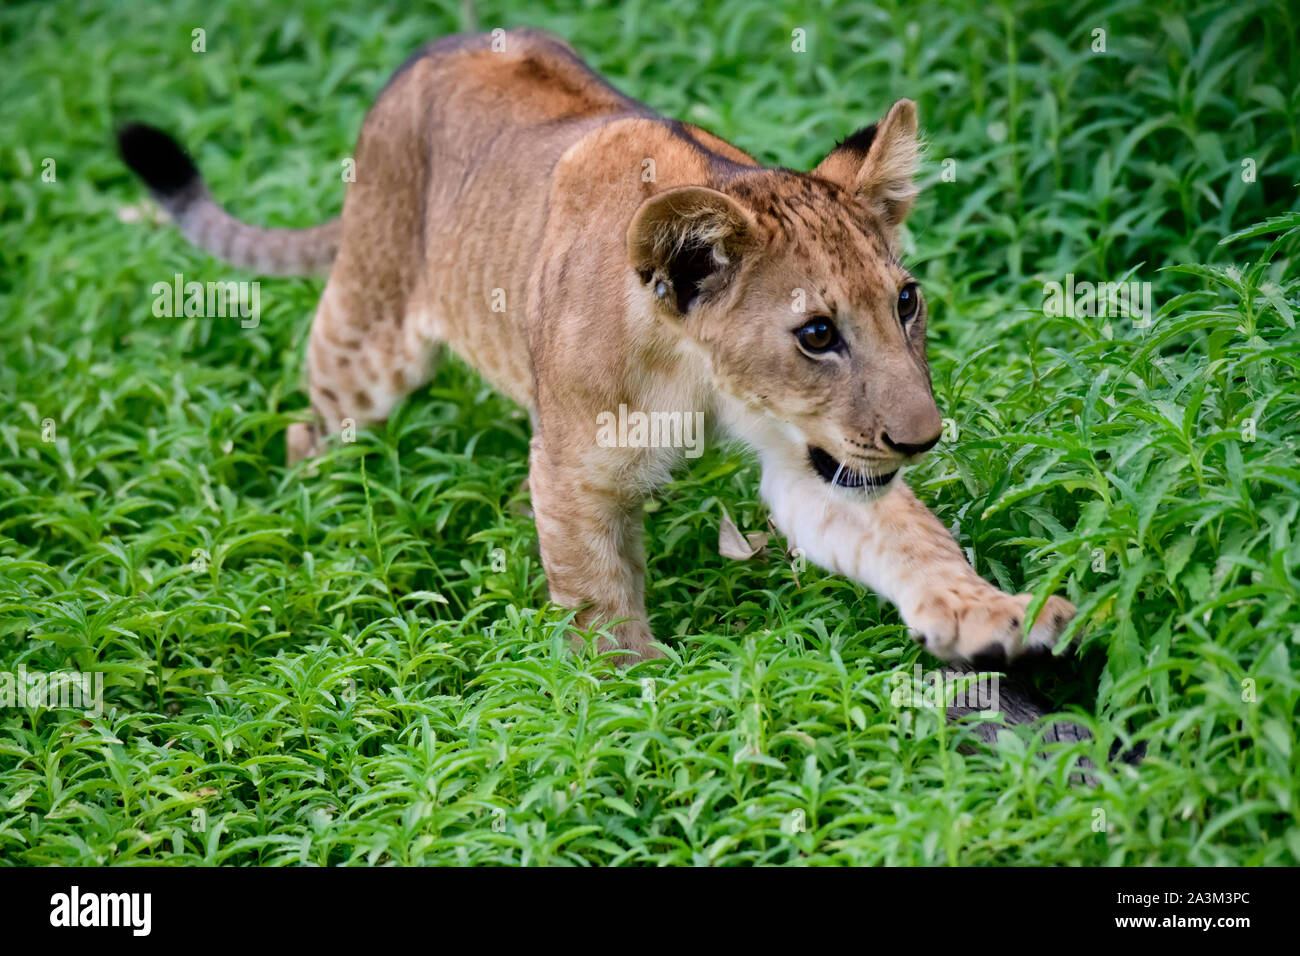 lion cub exploring its environment Stock Photo